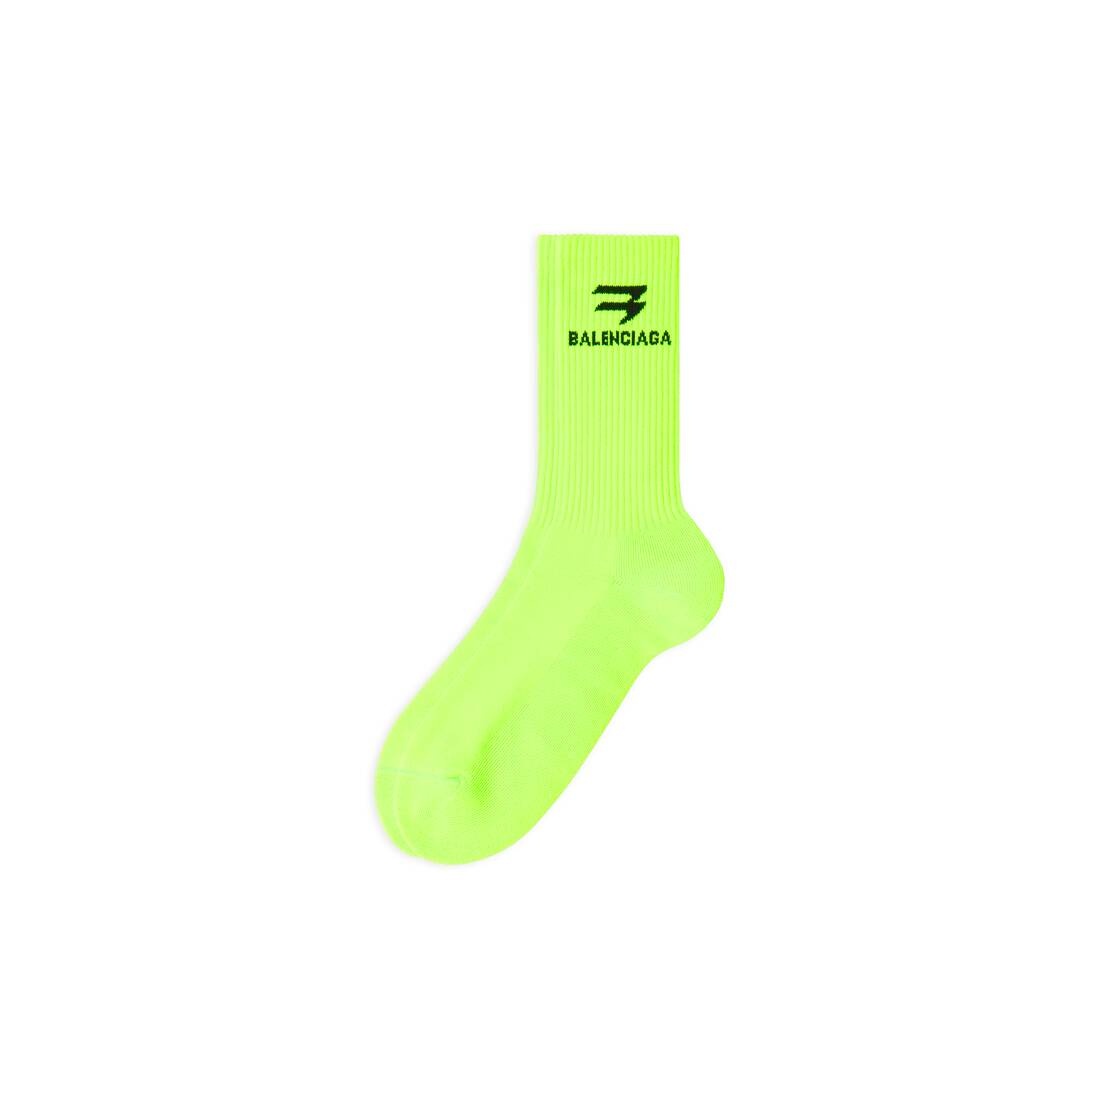 sporty b tennis socks - 2